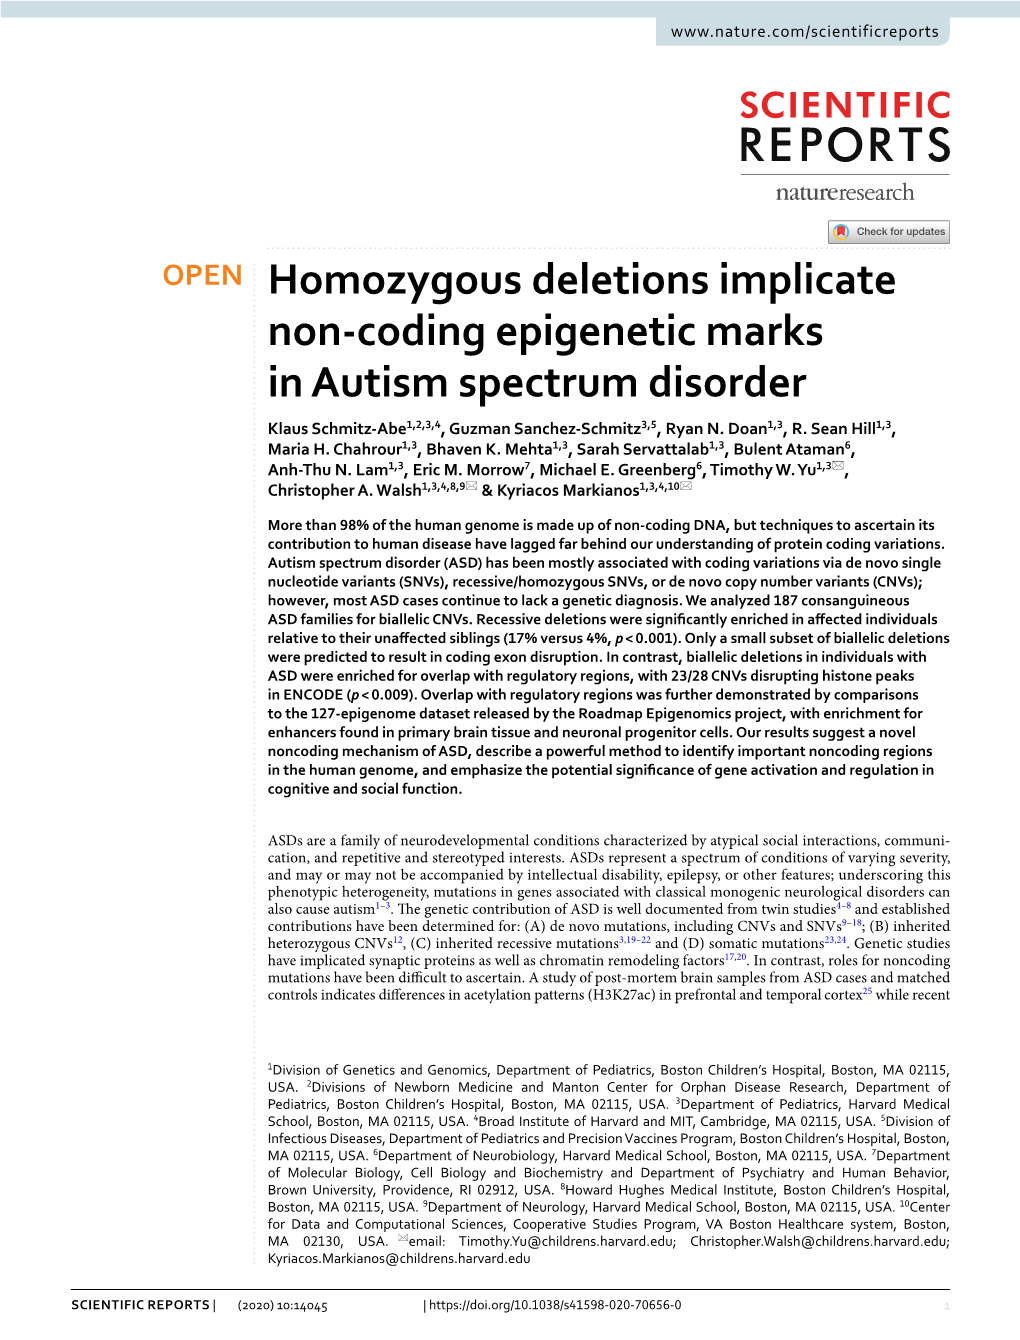 Homozygous Deletions Implicate Non-Coding Epigenetic Marks In